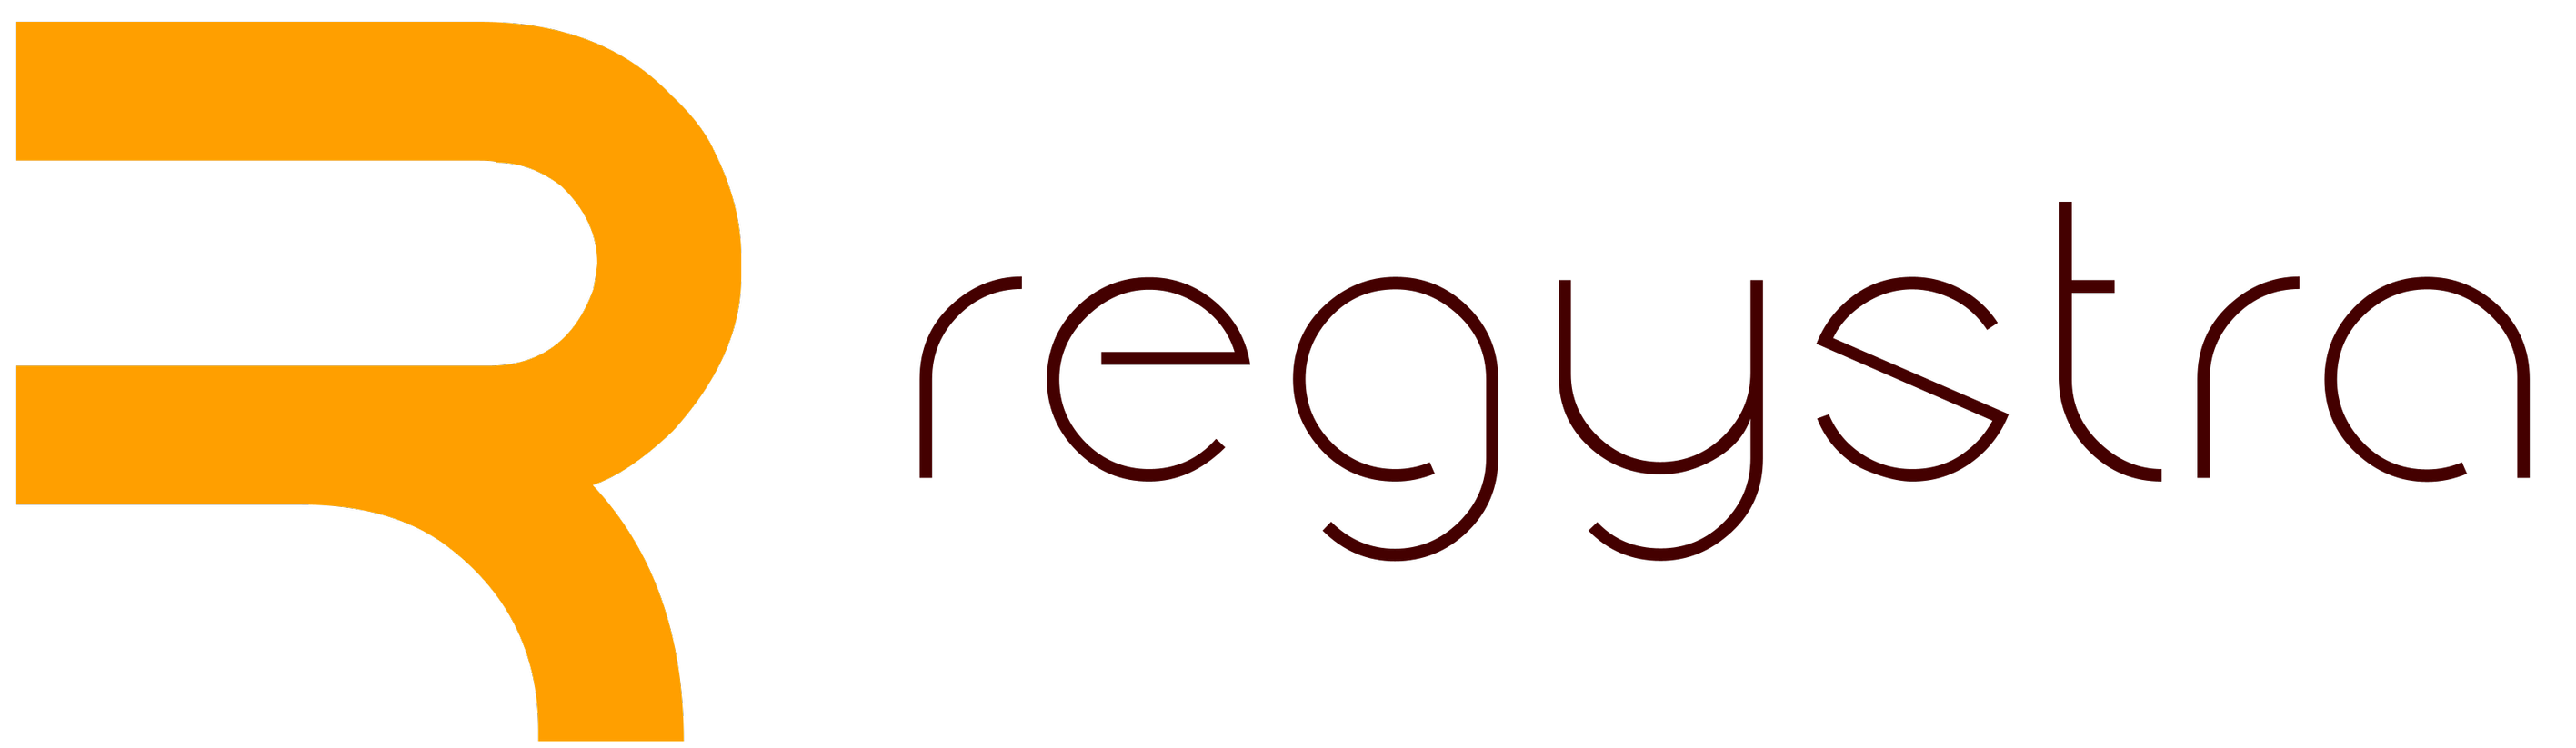 Regystra Sports CRM Logo